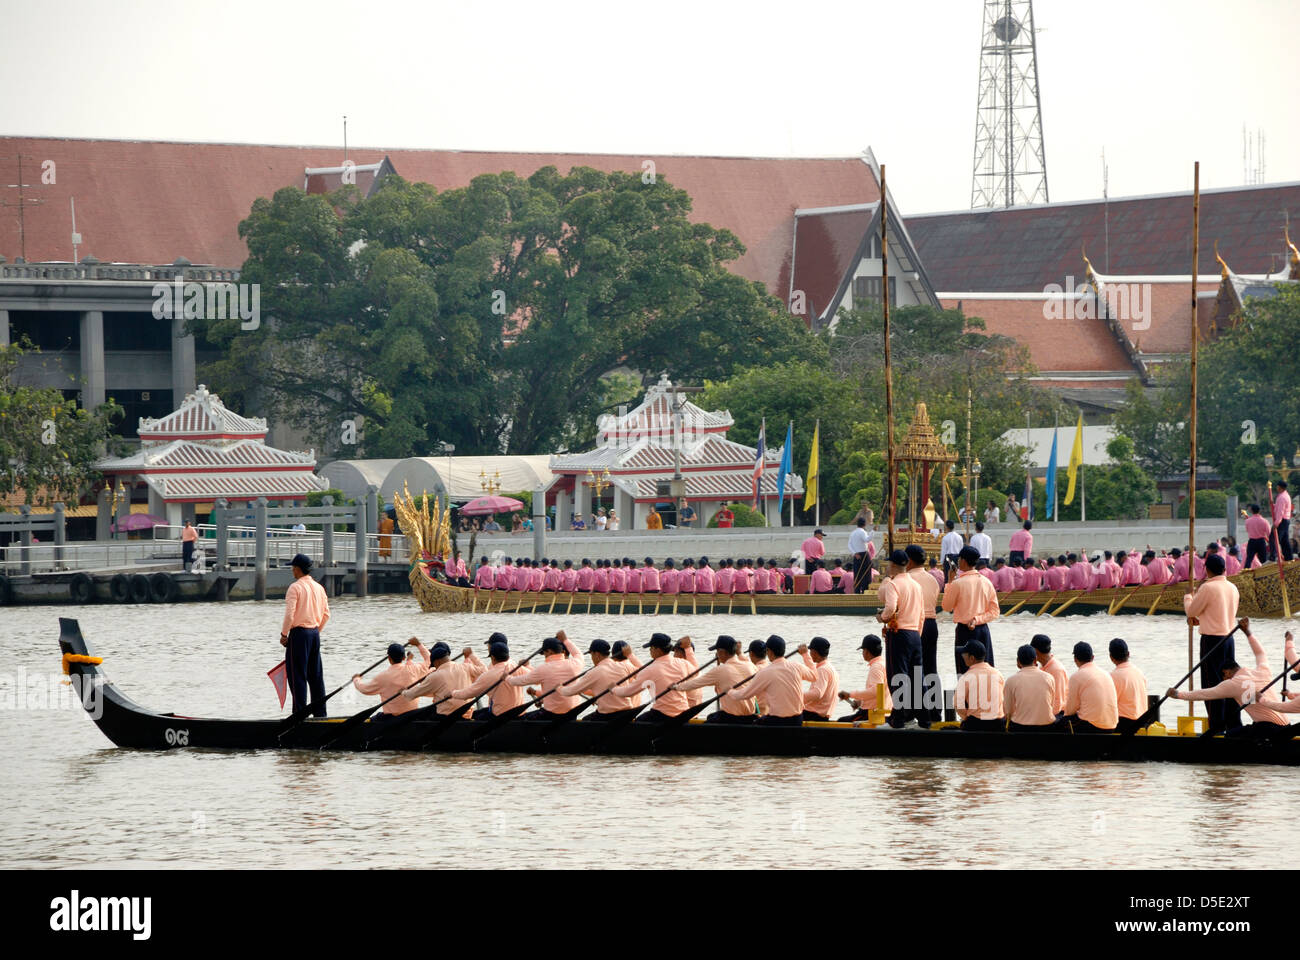 The Thai royal navy rehearsing for the kings birthday due in december taken in Bangkok Thailand on 20/10/2012 Stock Photo